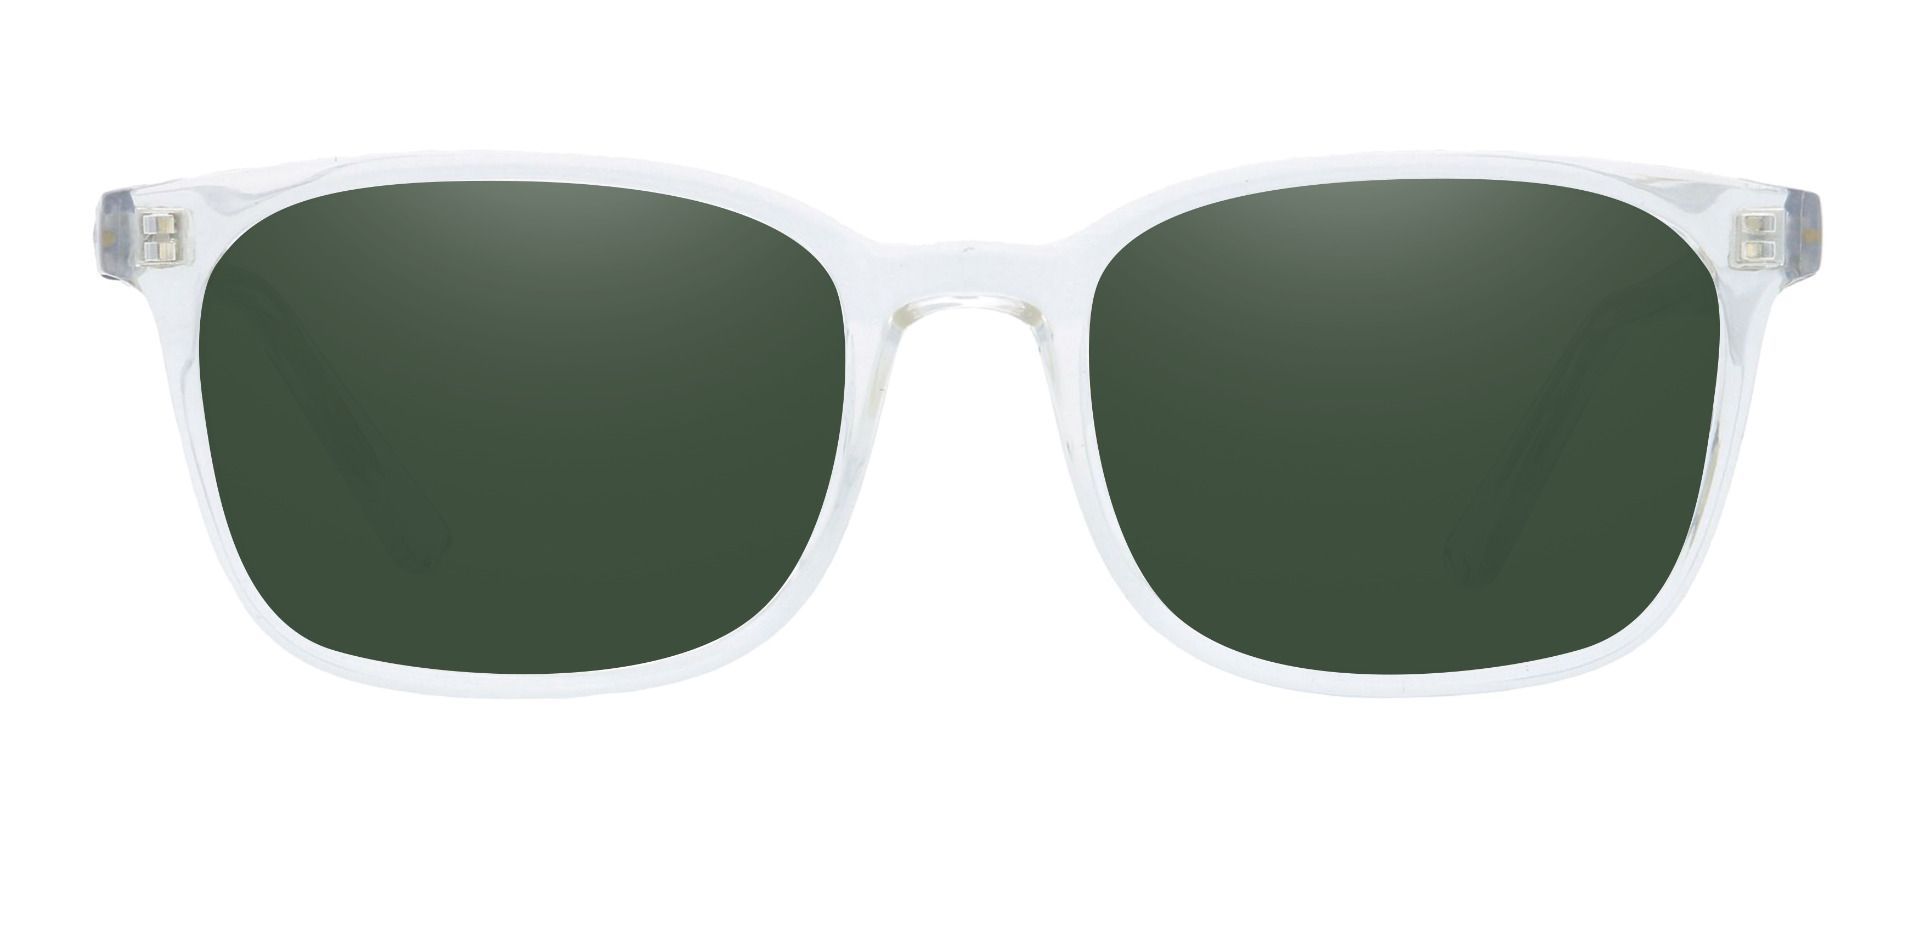 Windsor Rectangle Prescription Sunglasses - Clear Frame With Green Lenses